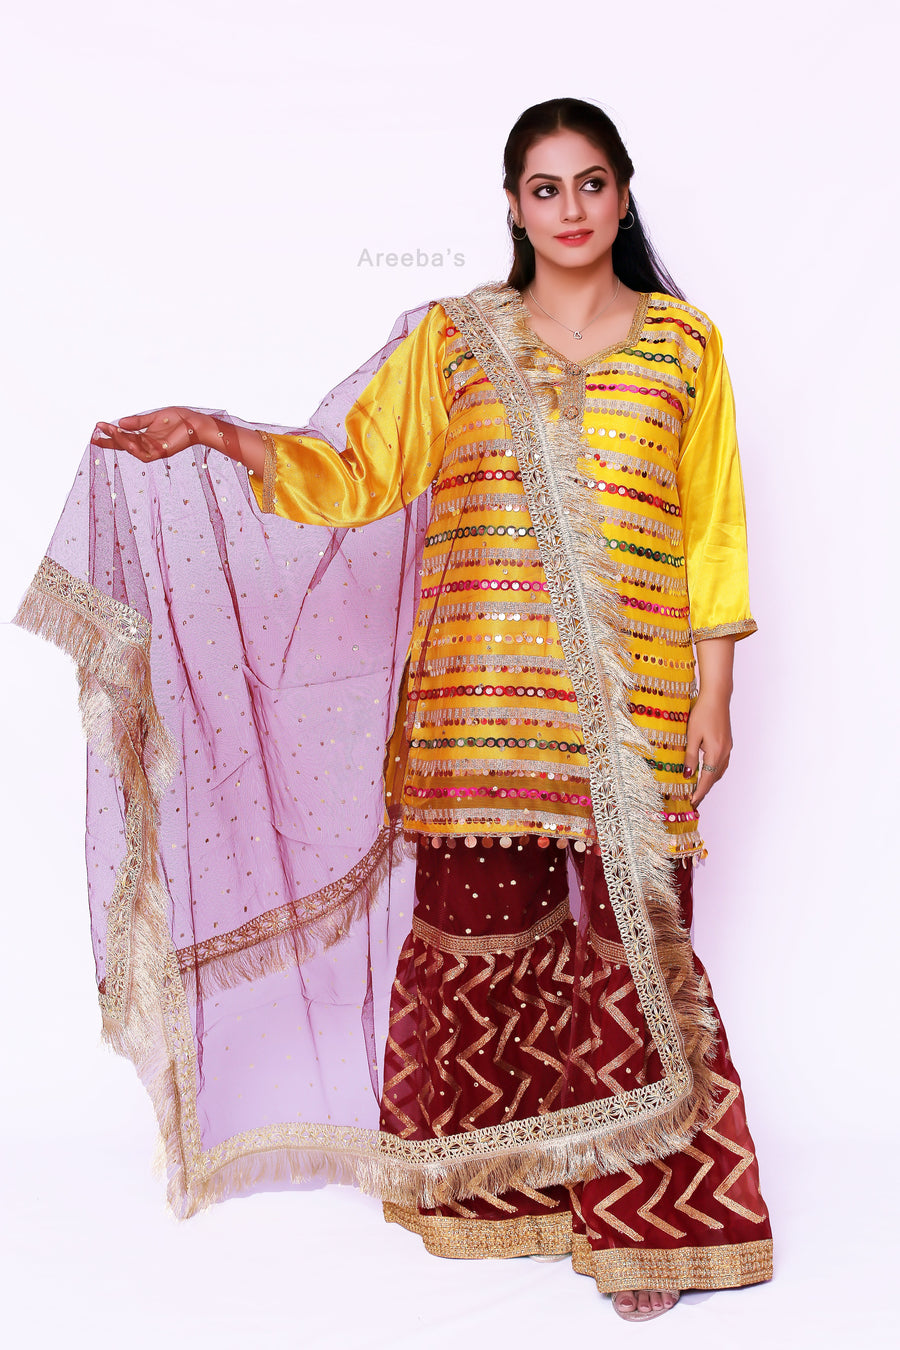 Mehndi gharaa suit- Areeba's Couture